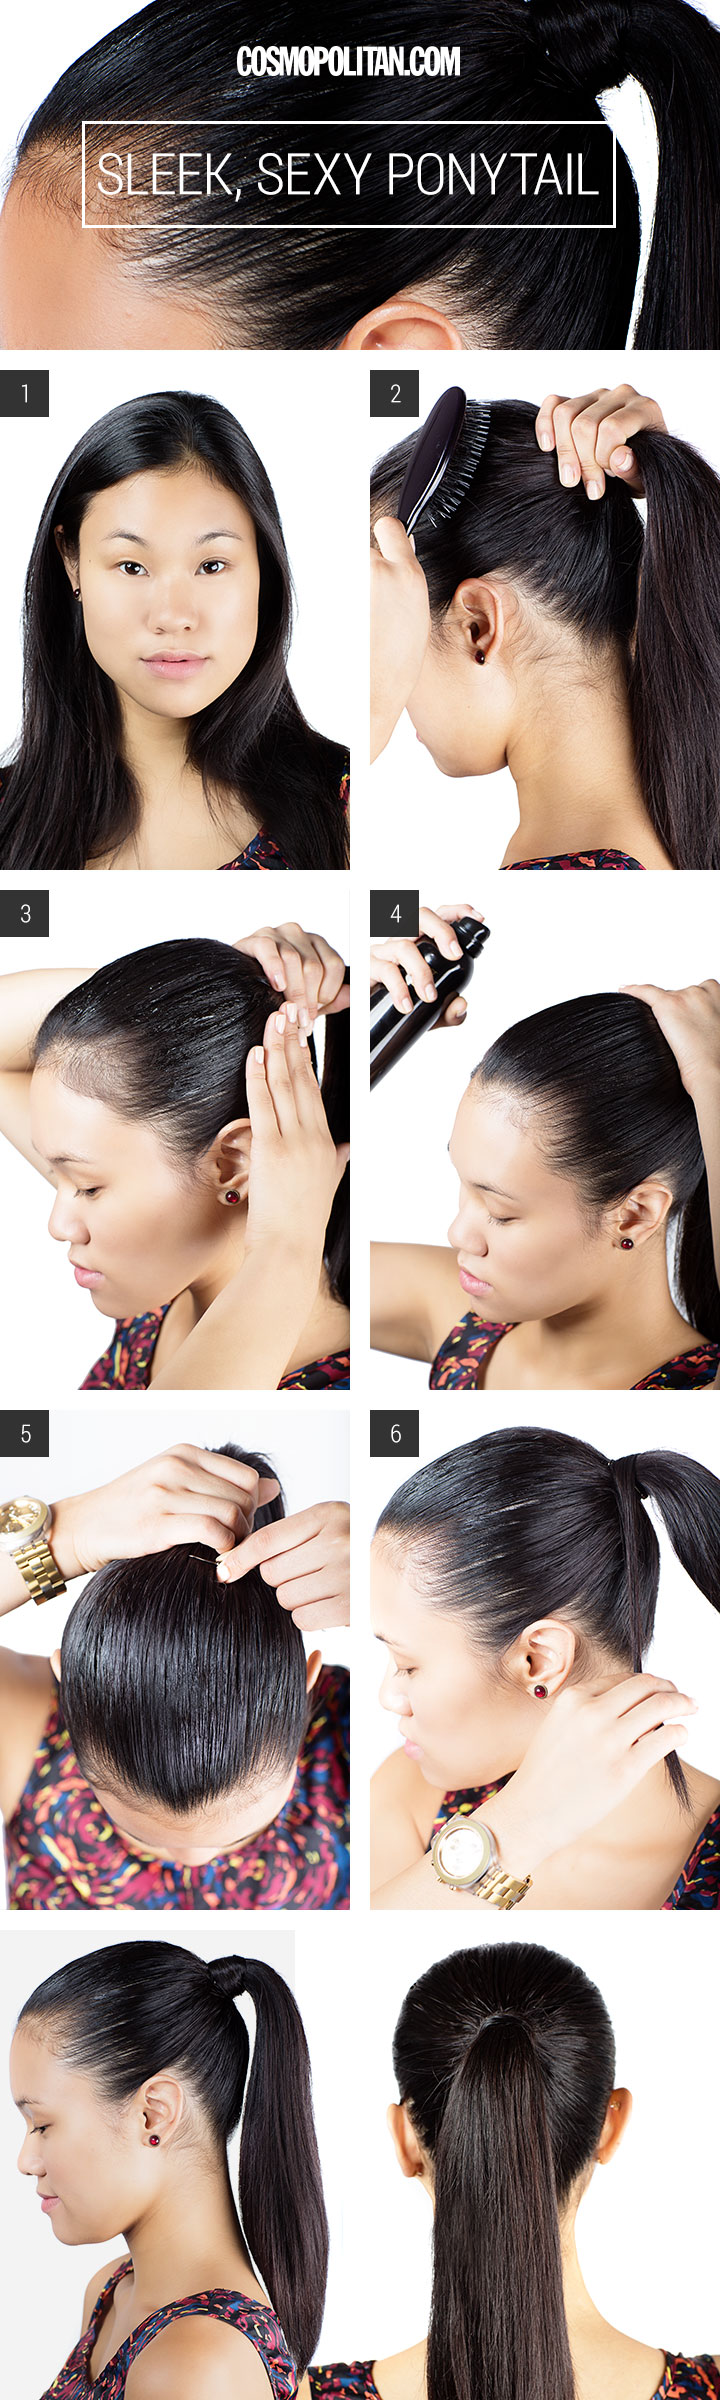 Hair Tutorials: Easy Hairstyles for Women